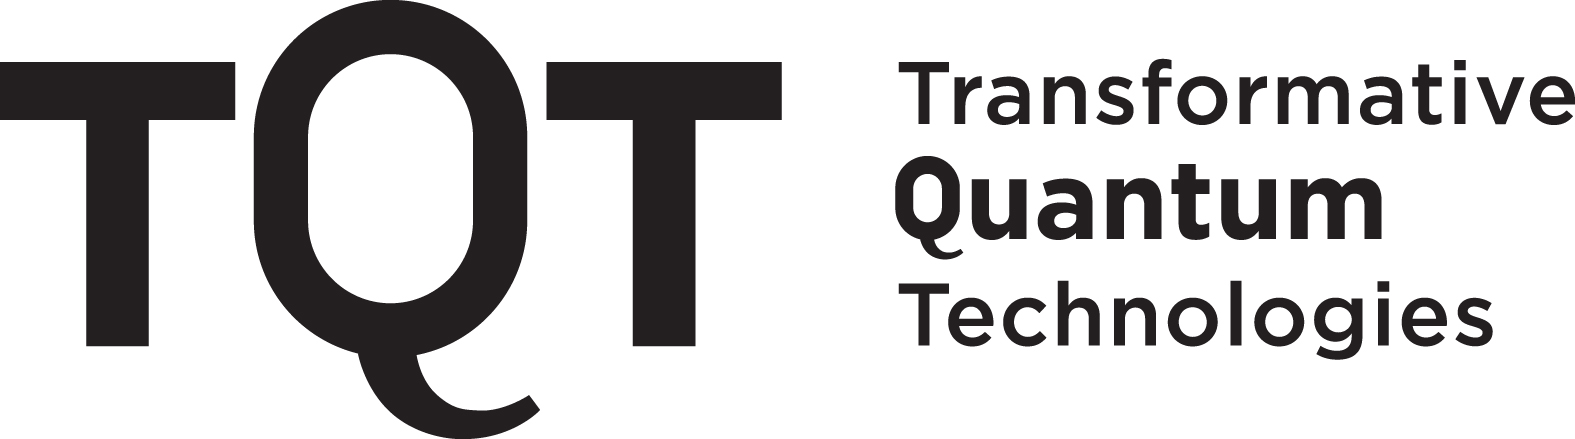 Transformative Quantum Technologies (TQT) 